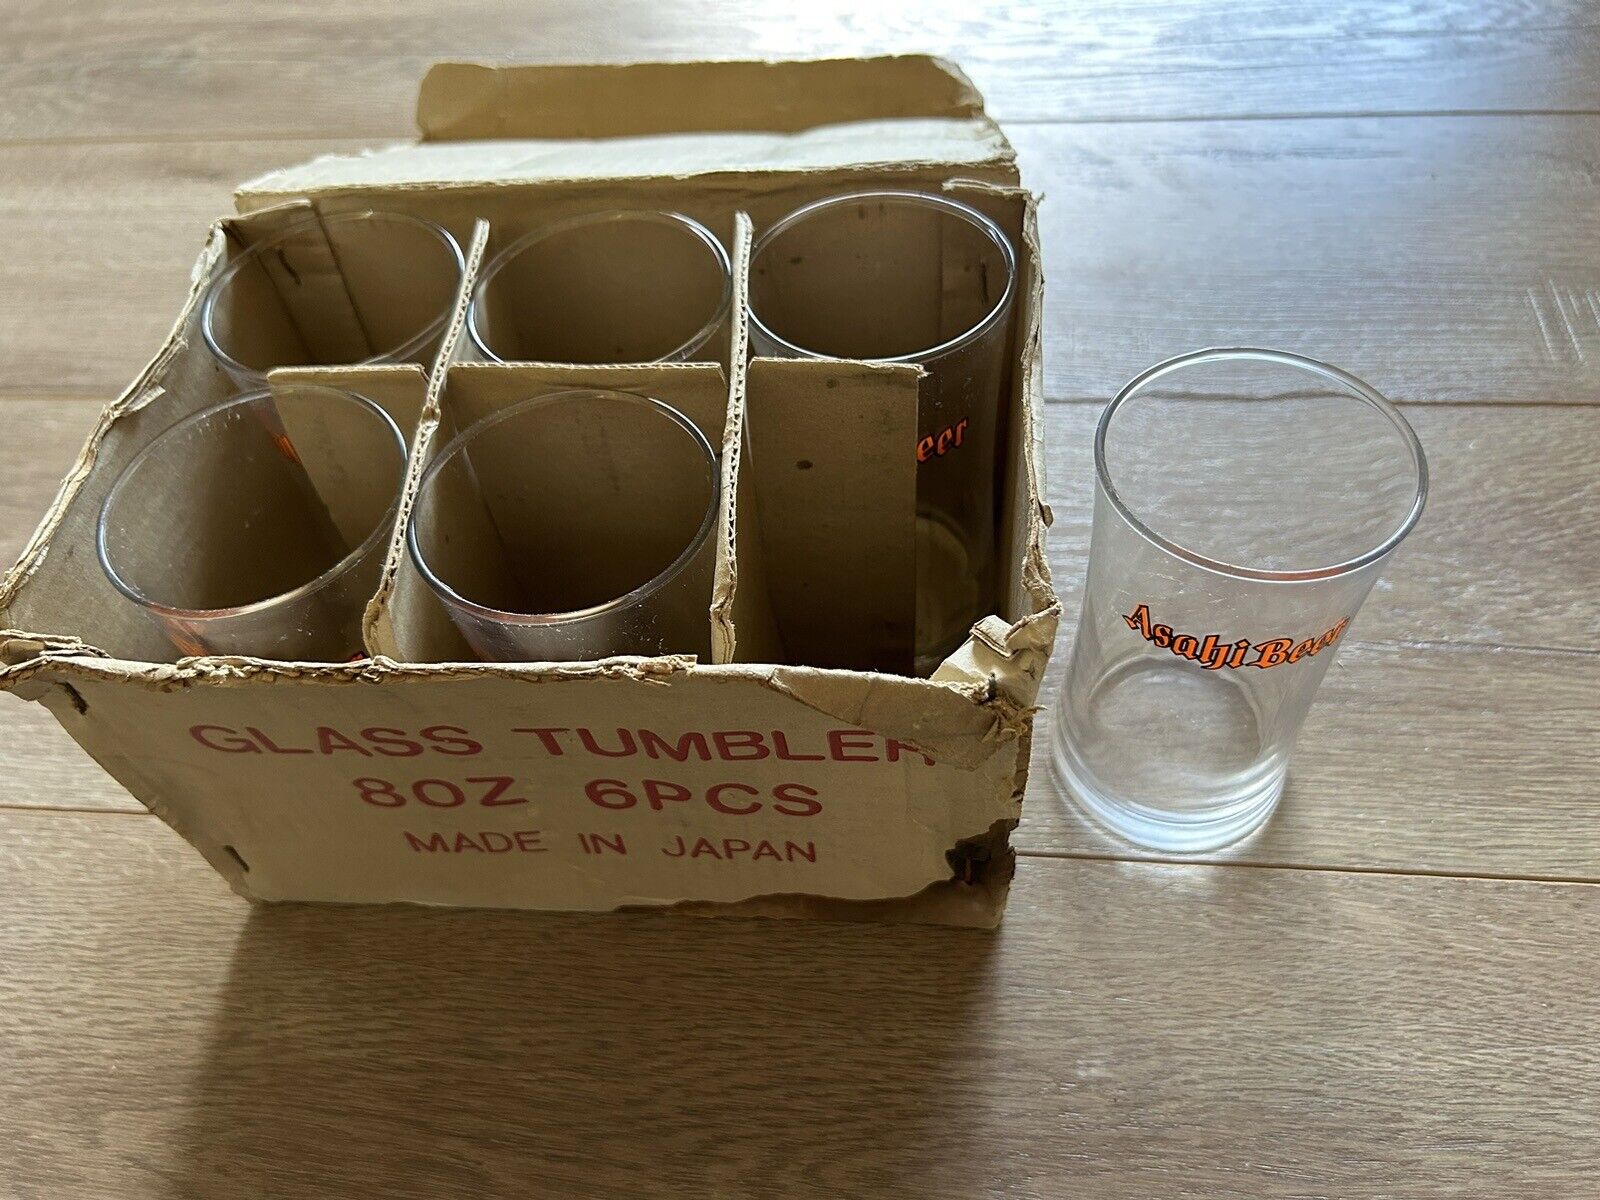 Vintage Asahi Beer 8oz Glass Tumbler Cup Set Of 6 Made In Japan